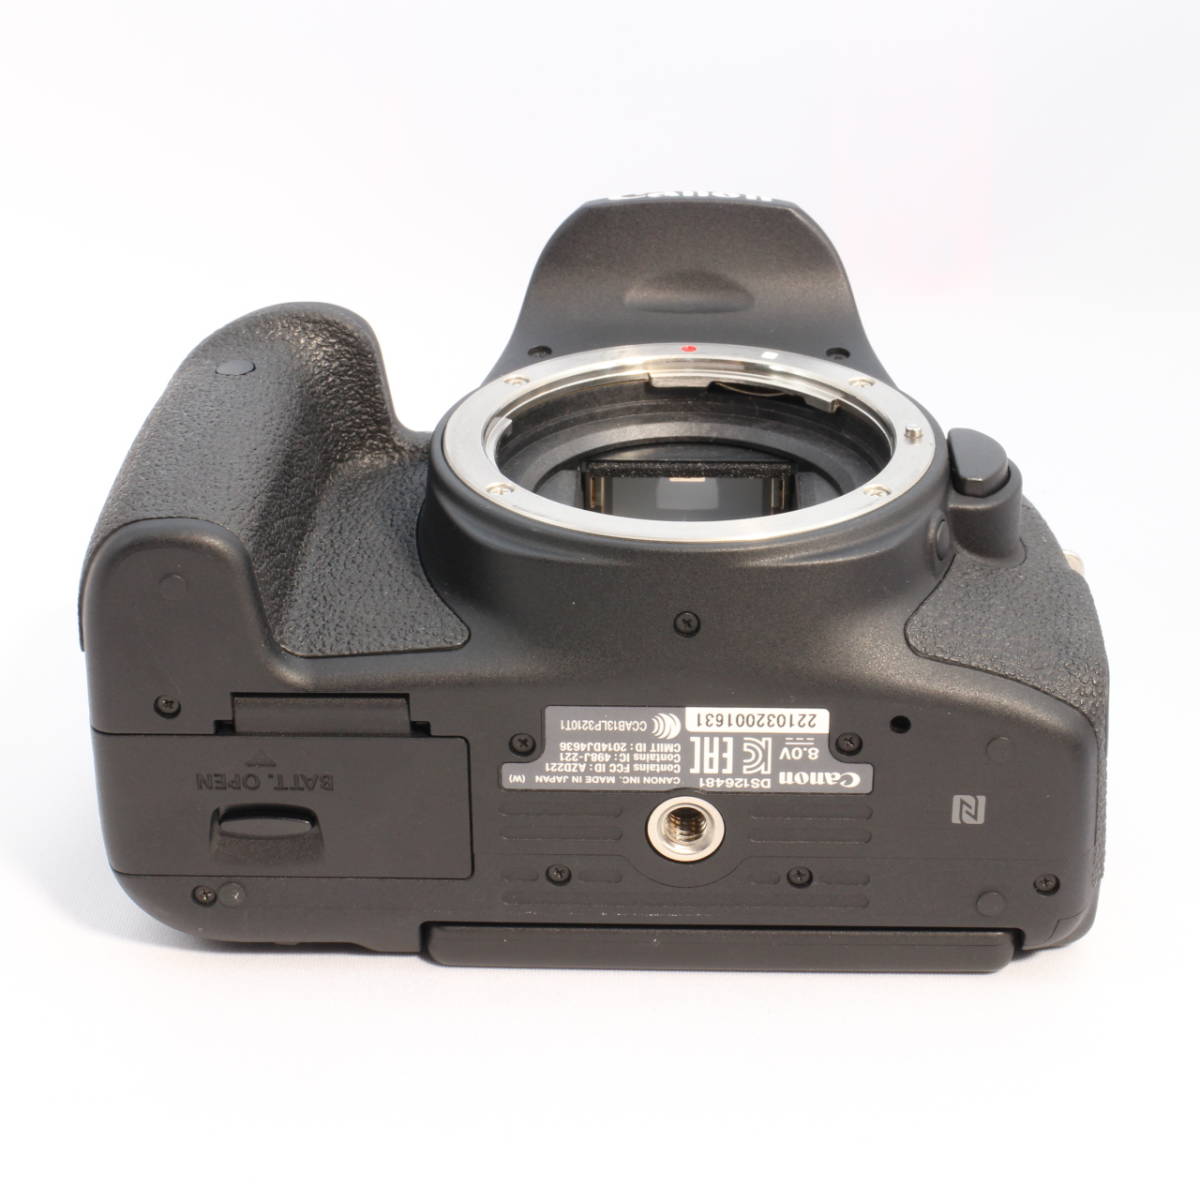 2441 Canon デジタル一眼レフカメラ EOS 8000D ボディ 2420万画素